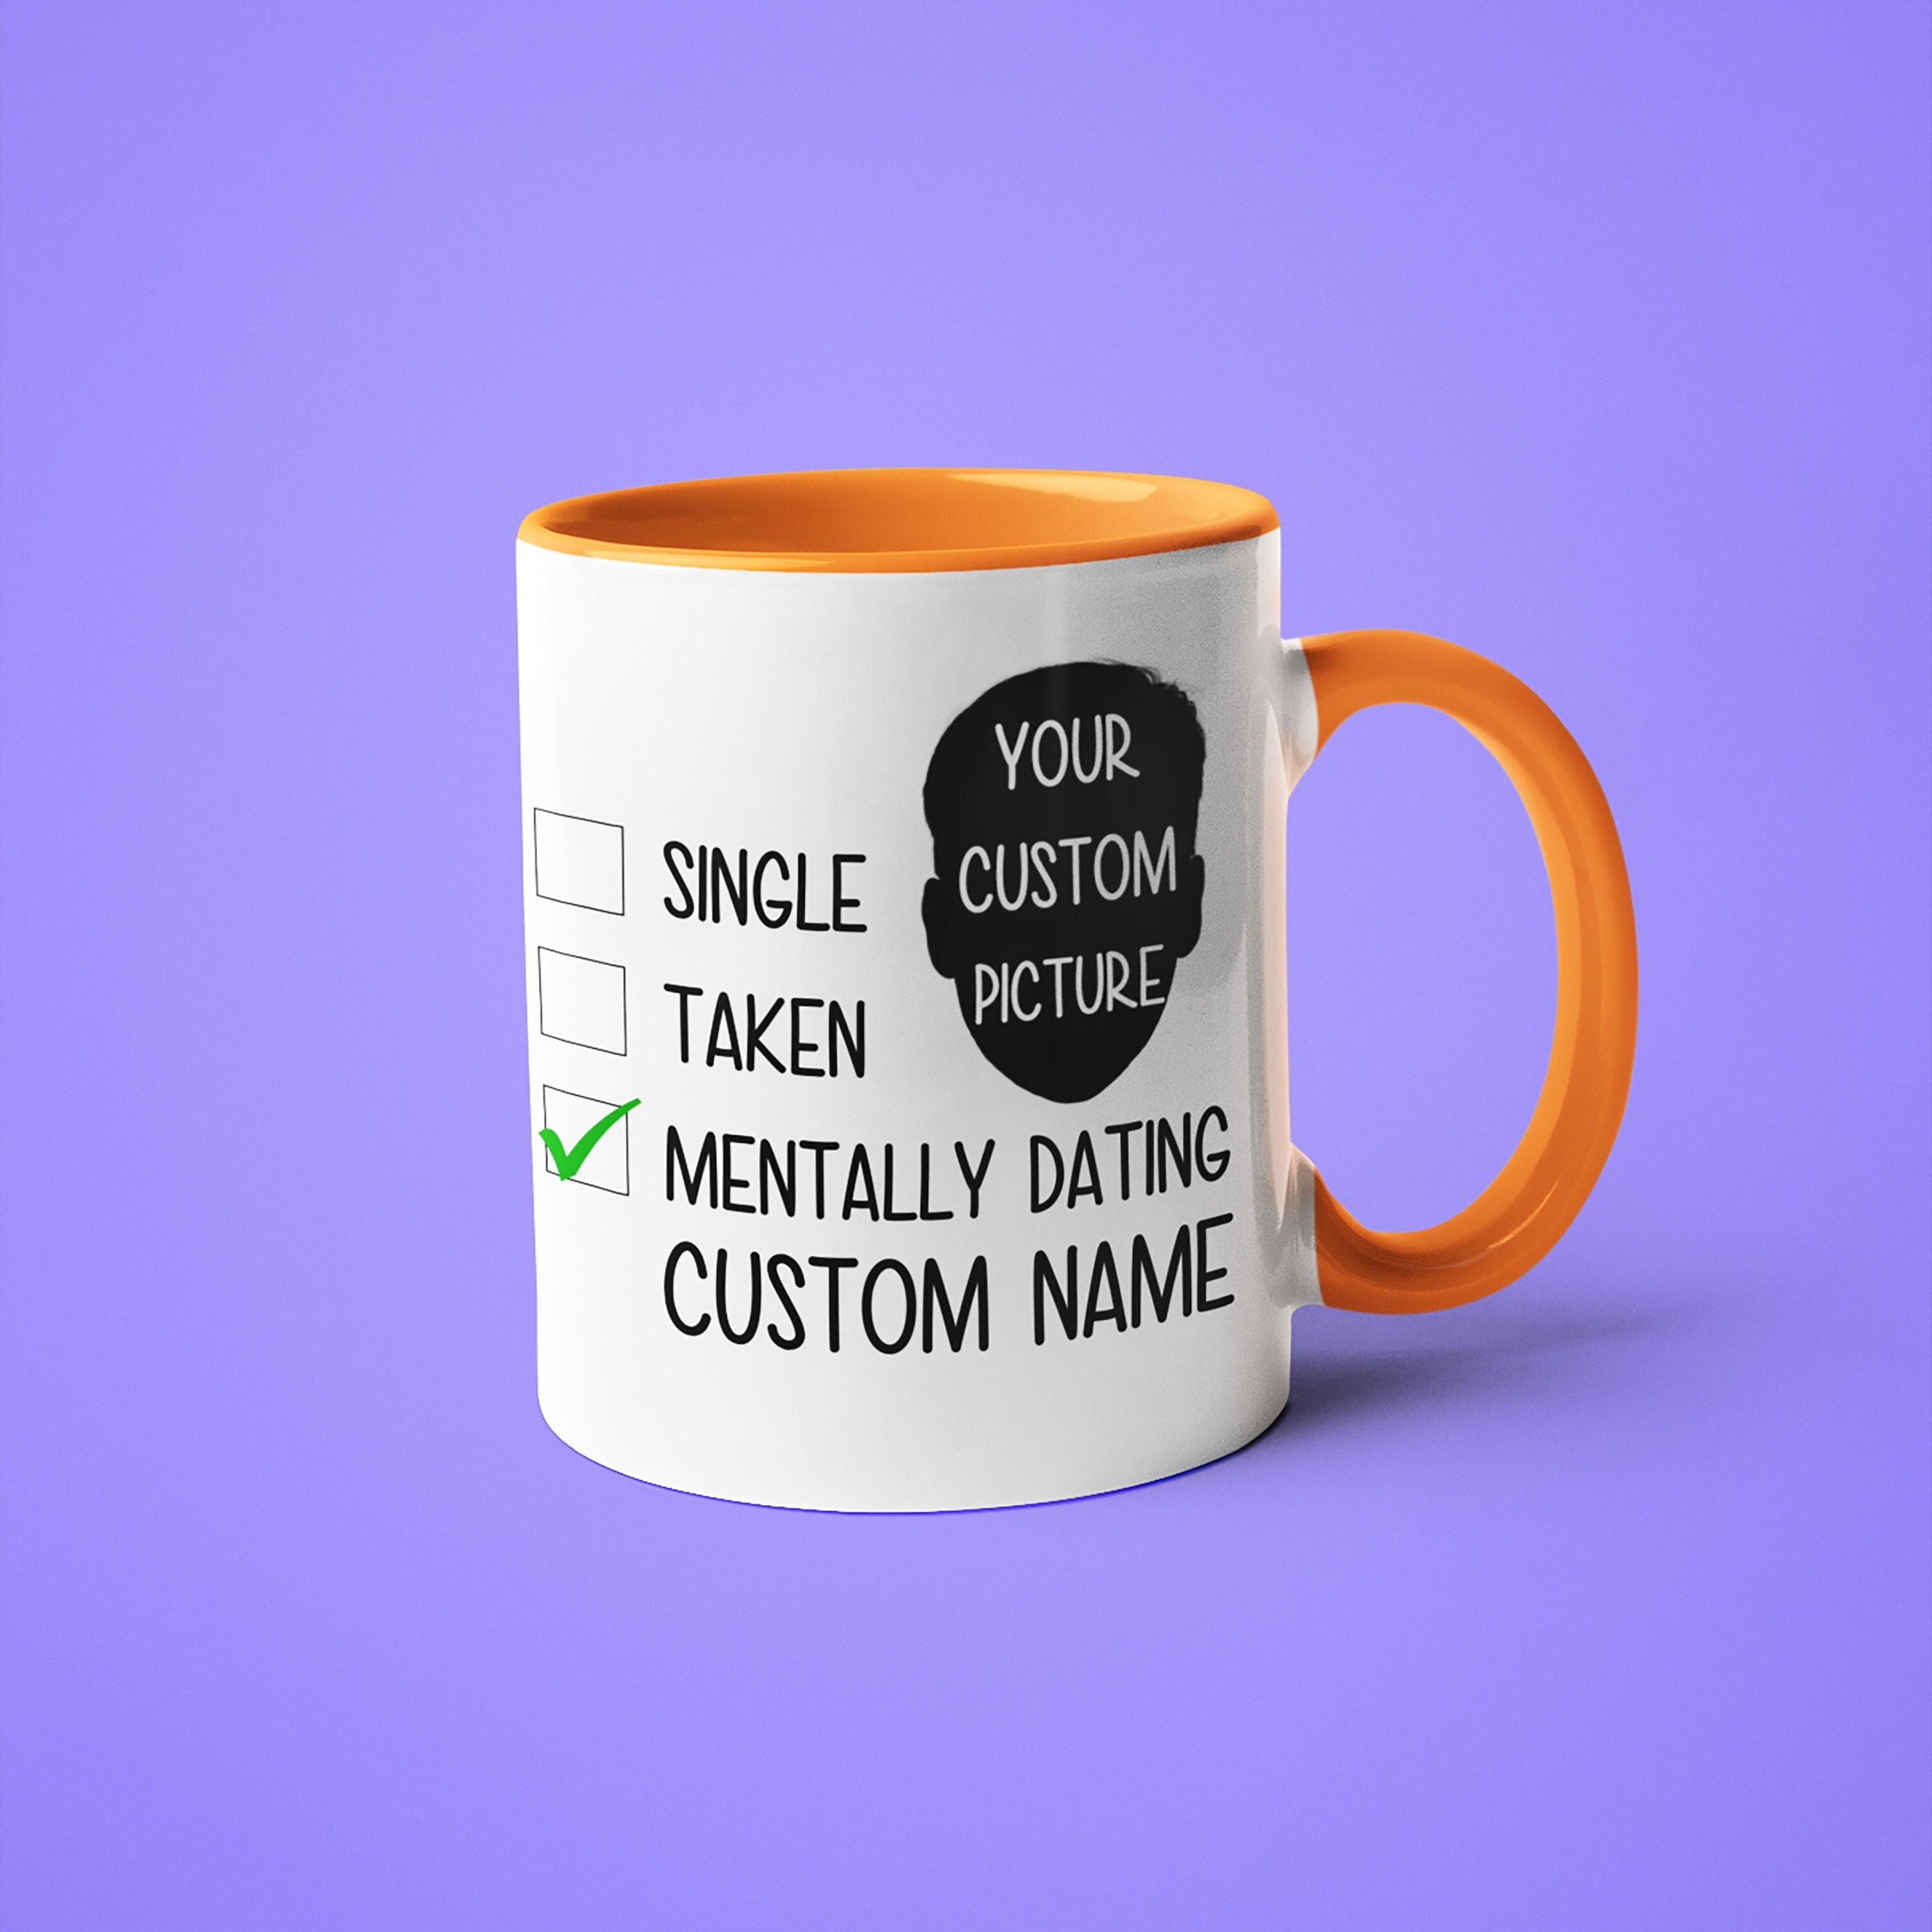 Stanley Tucci Kombucha MUG - Coffee Mug - Stanley Tucci Mug, Kombucha –  MakeMoody